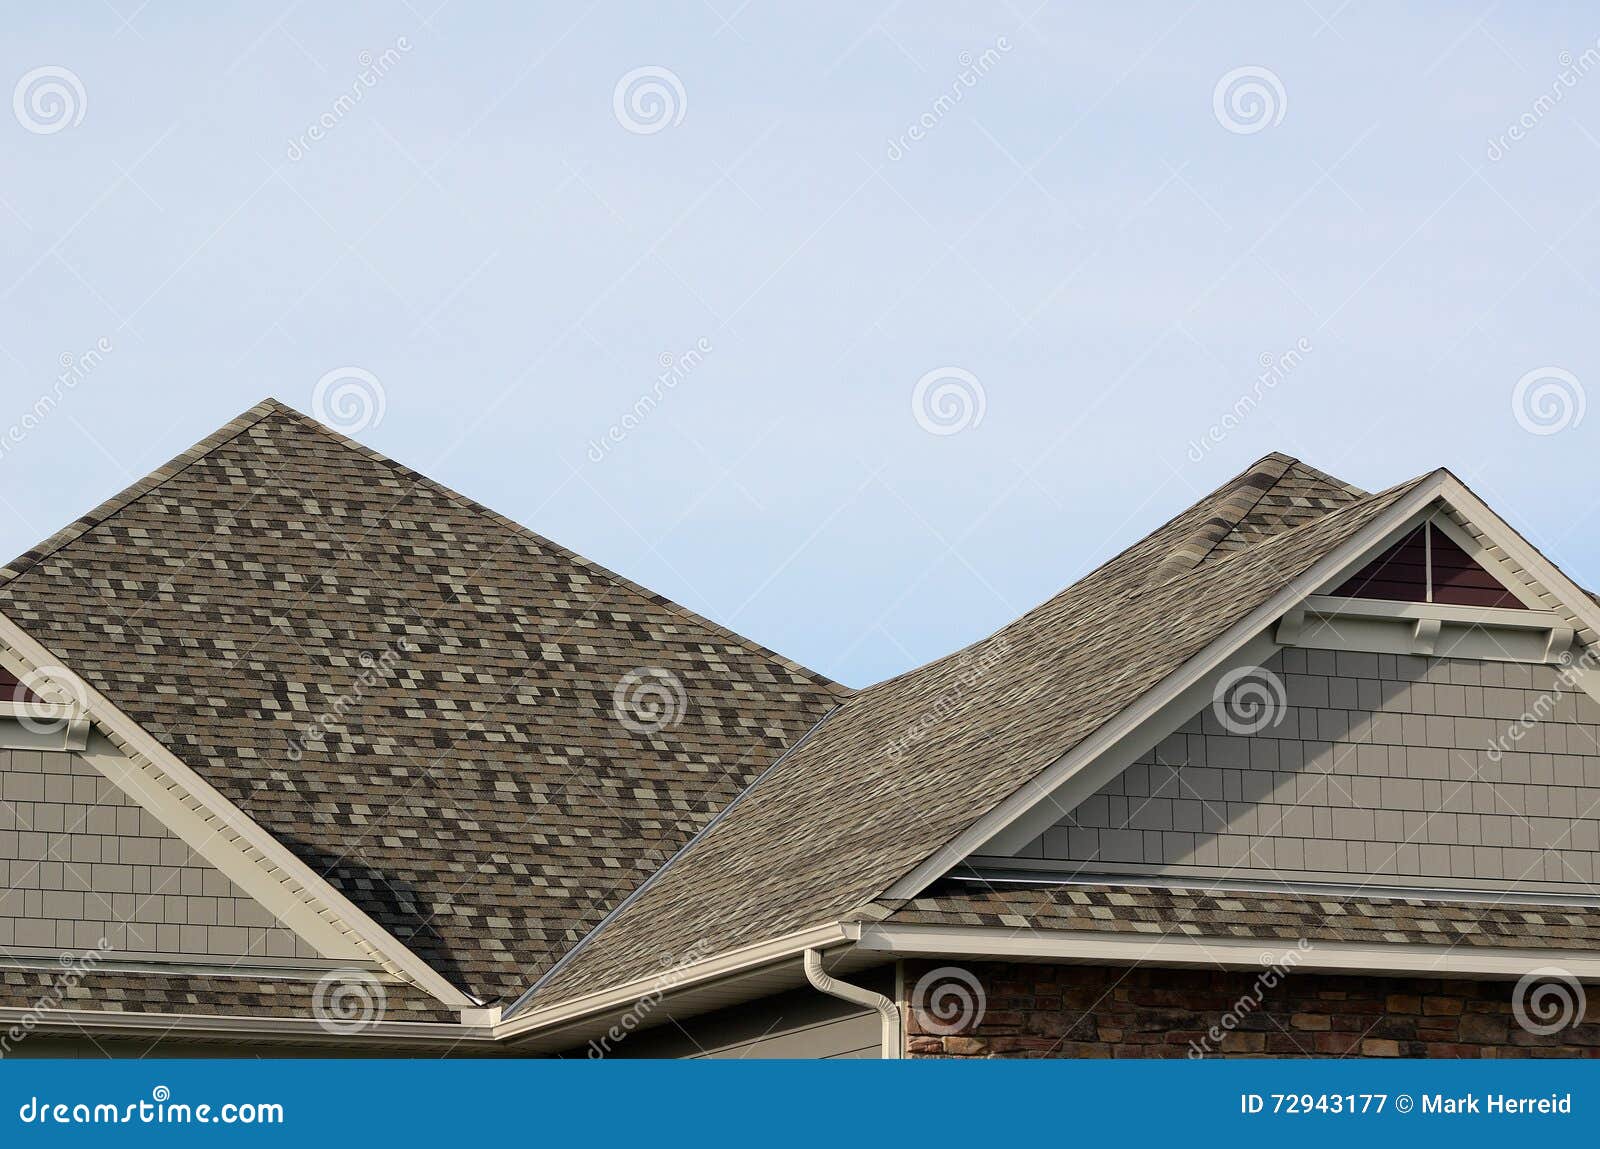 asphalt shingles on a hip roof